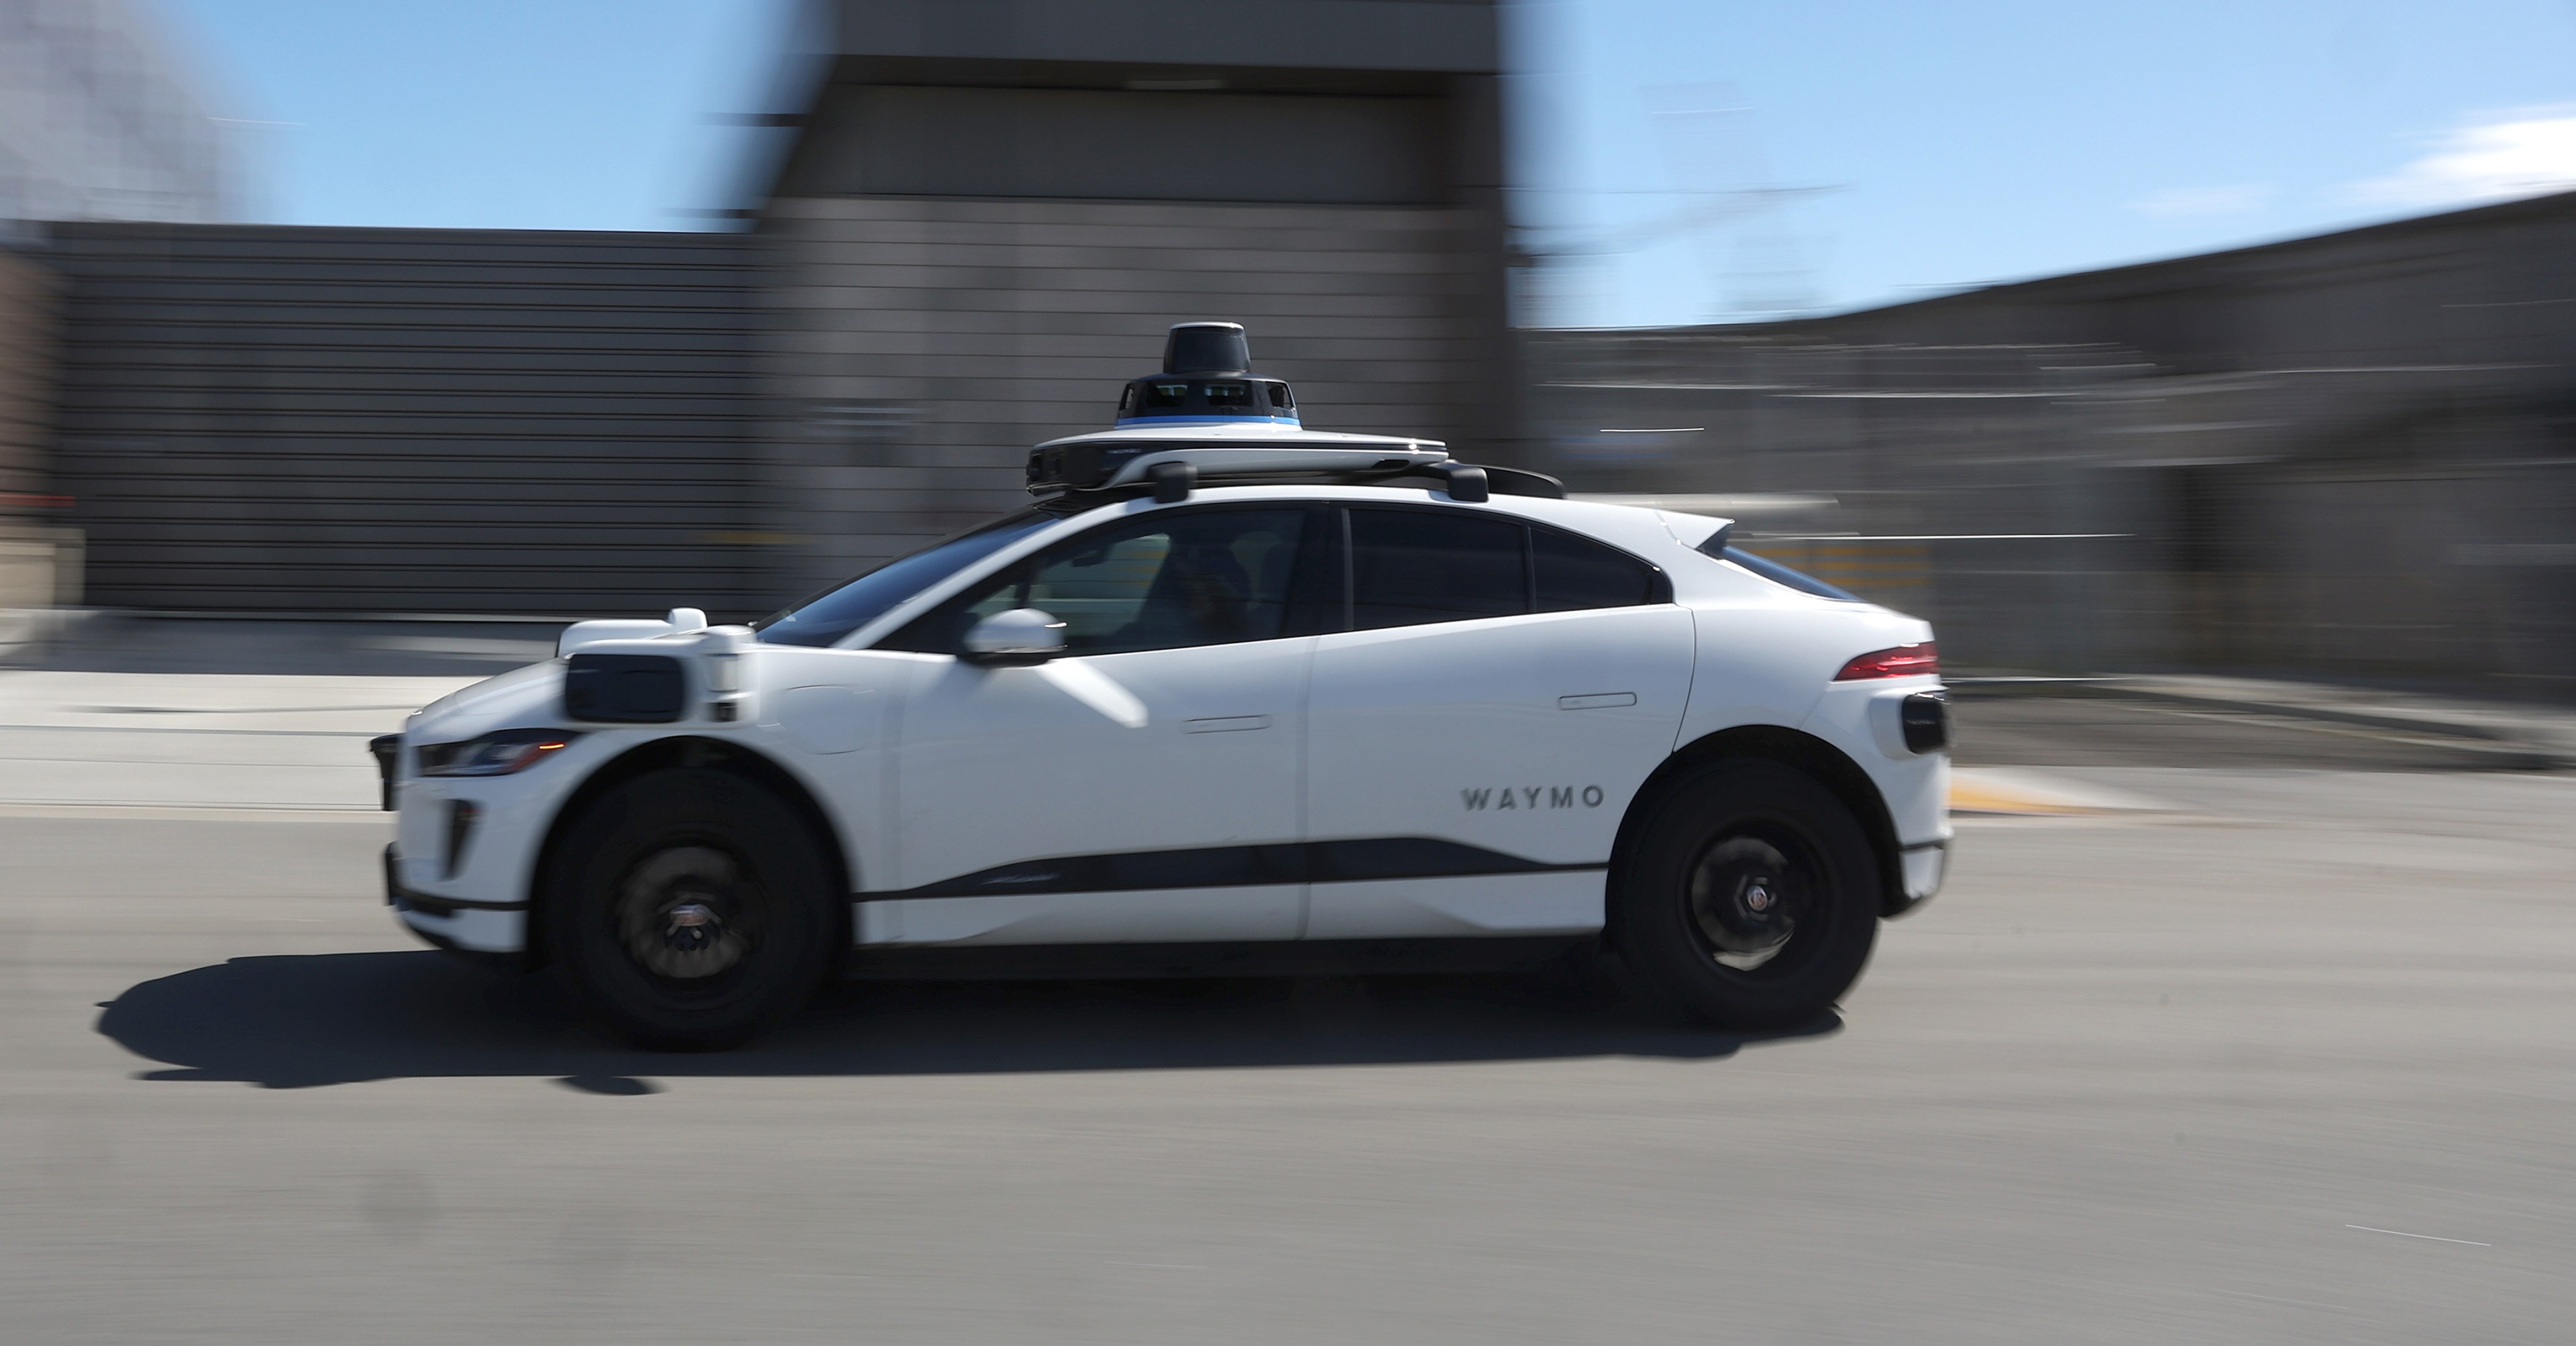 A white Waymo driverless SUV zips along a city street